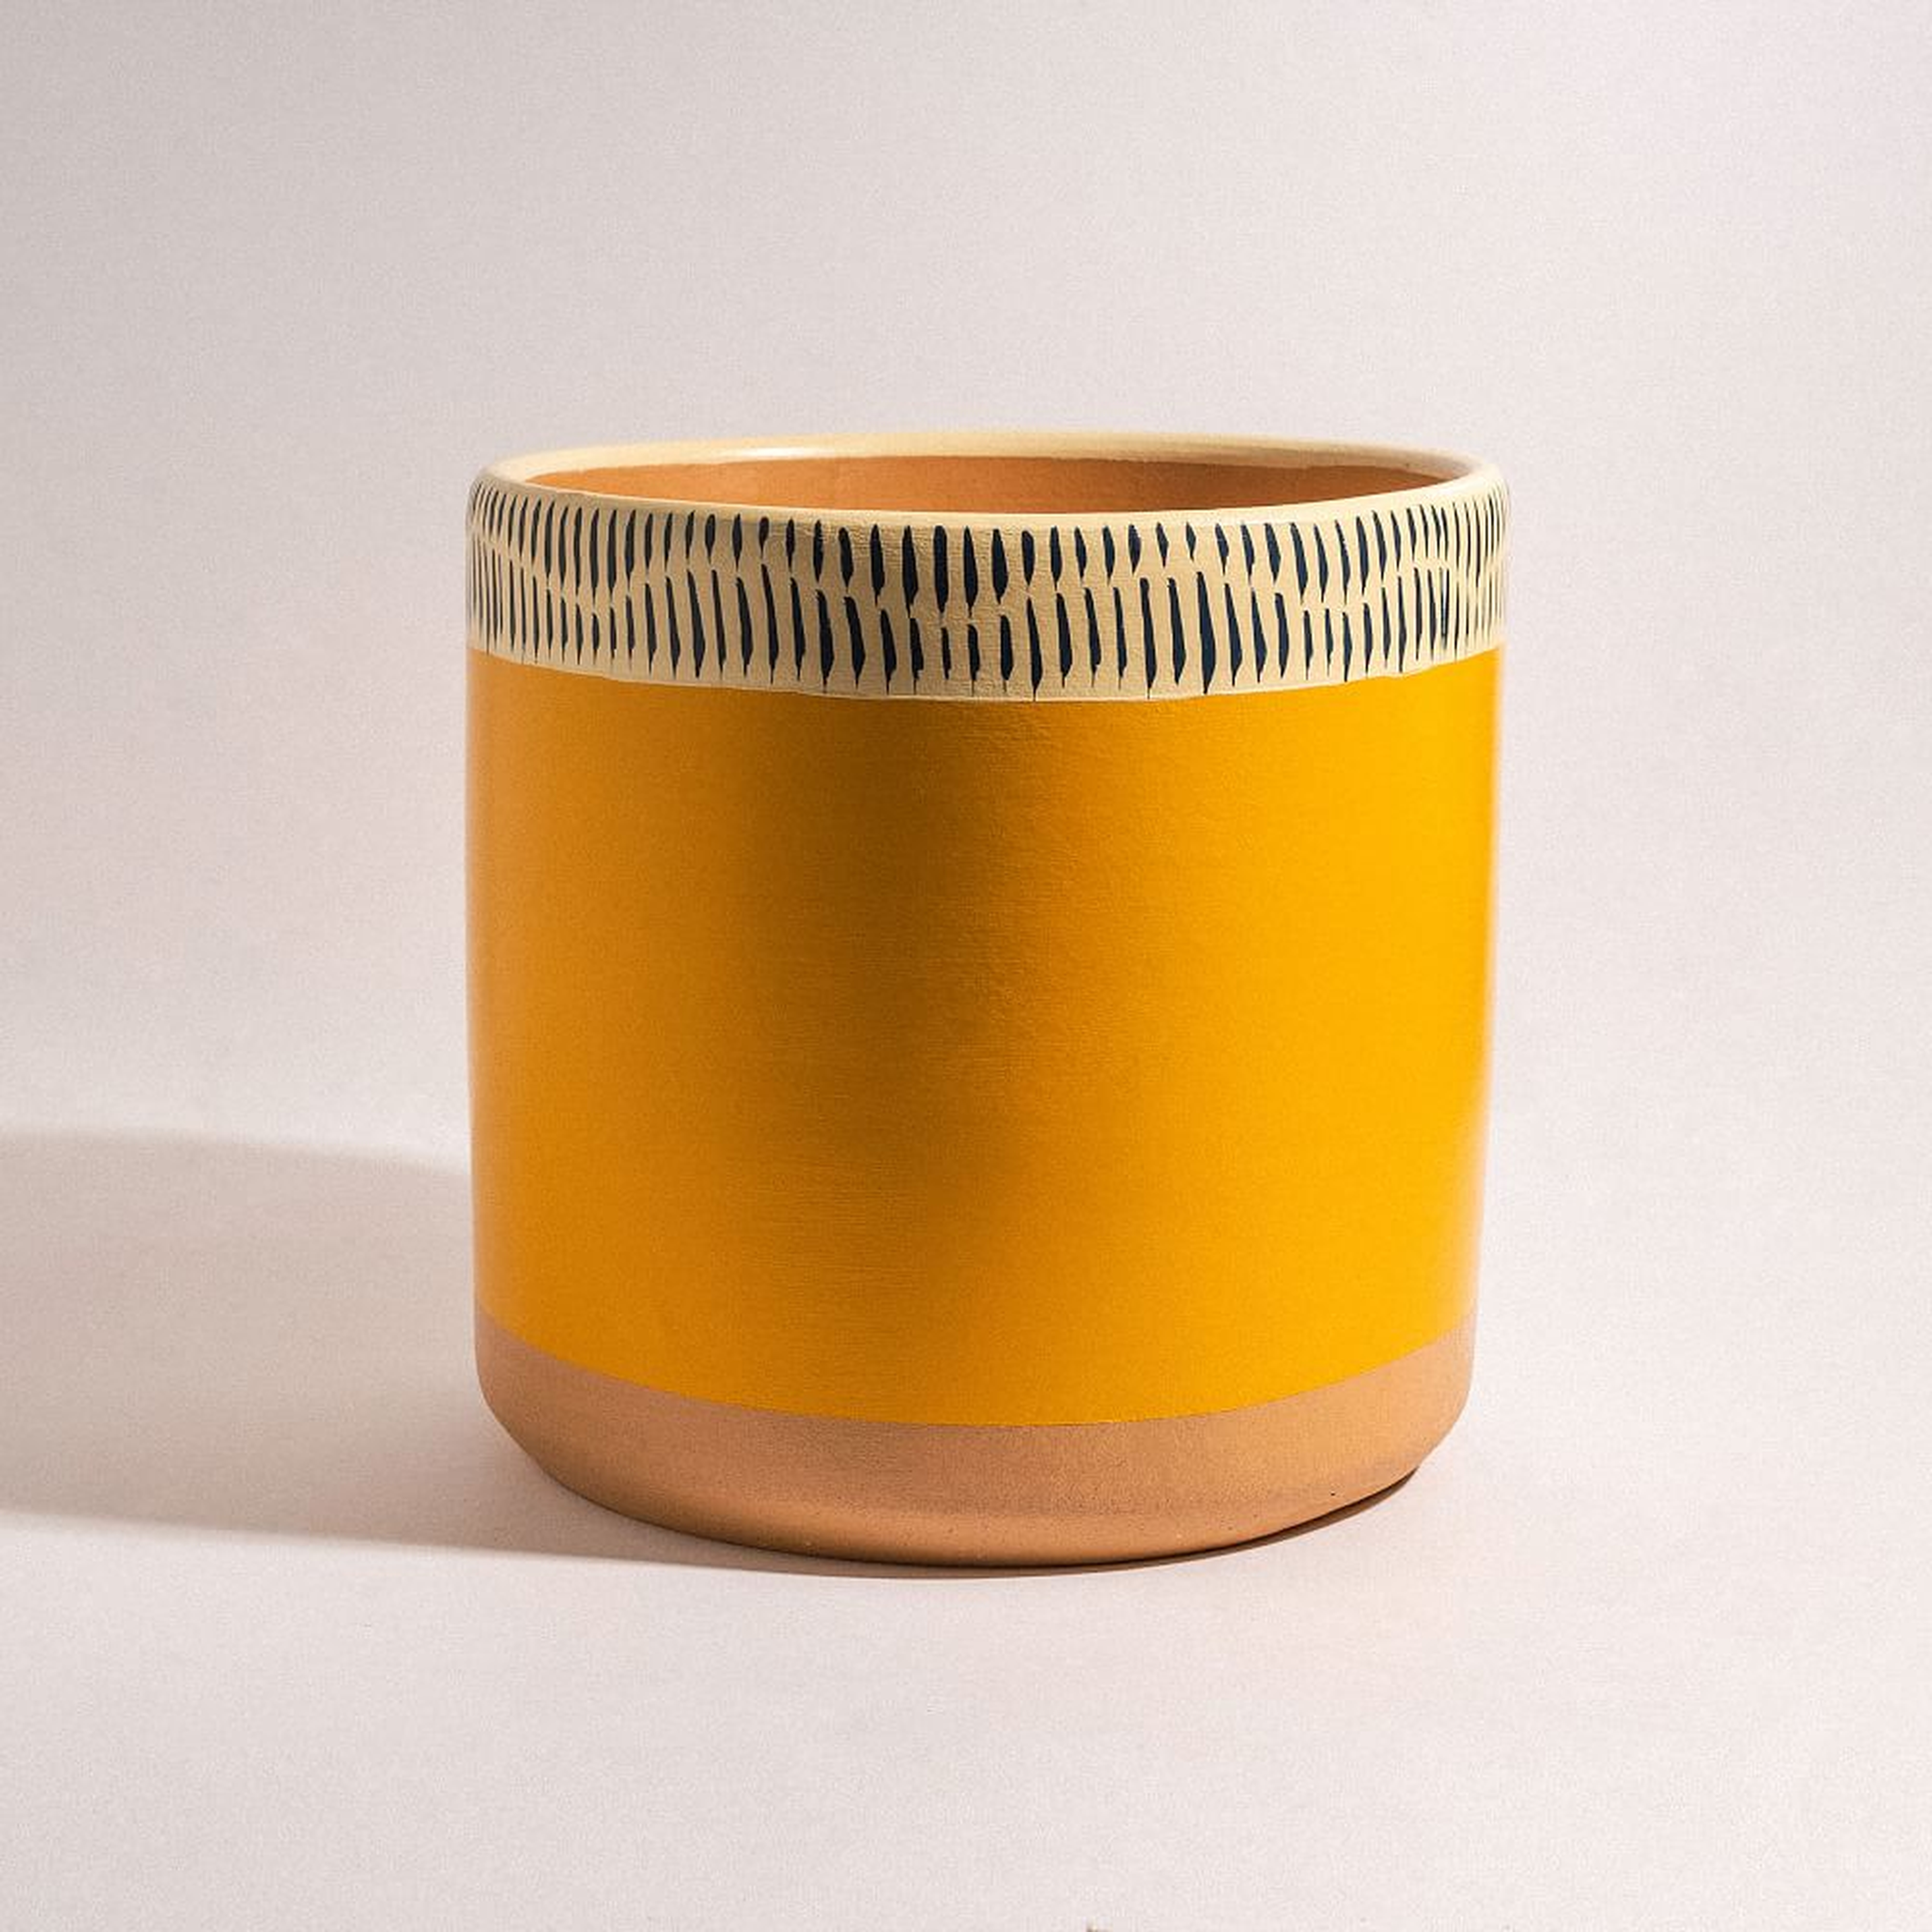 Ultralight Dreams Indoor Terracotta Pot, Medium, Terracotta/Yellow - West Elm